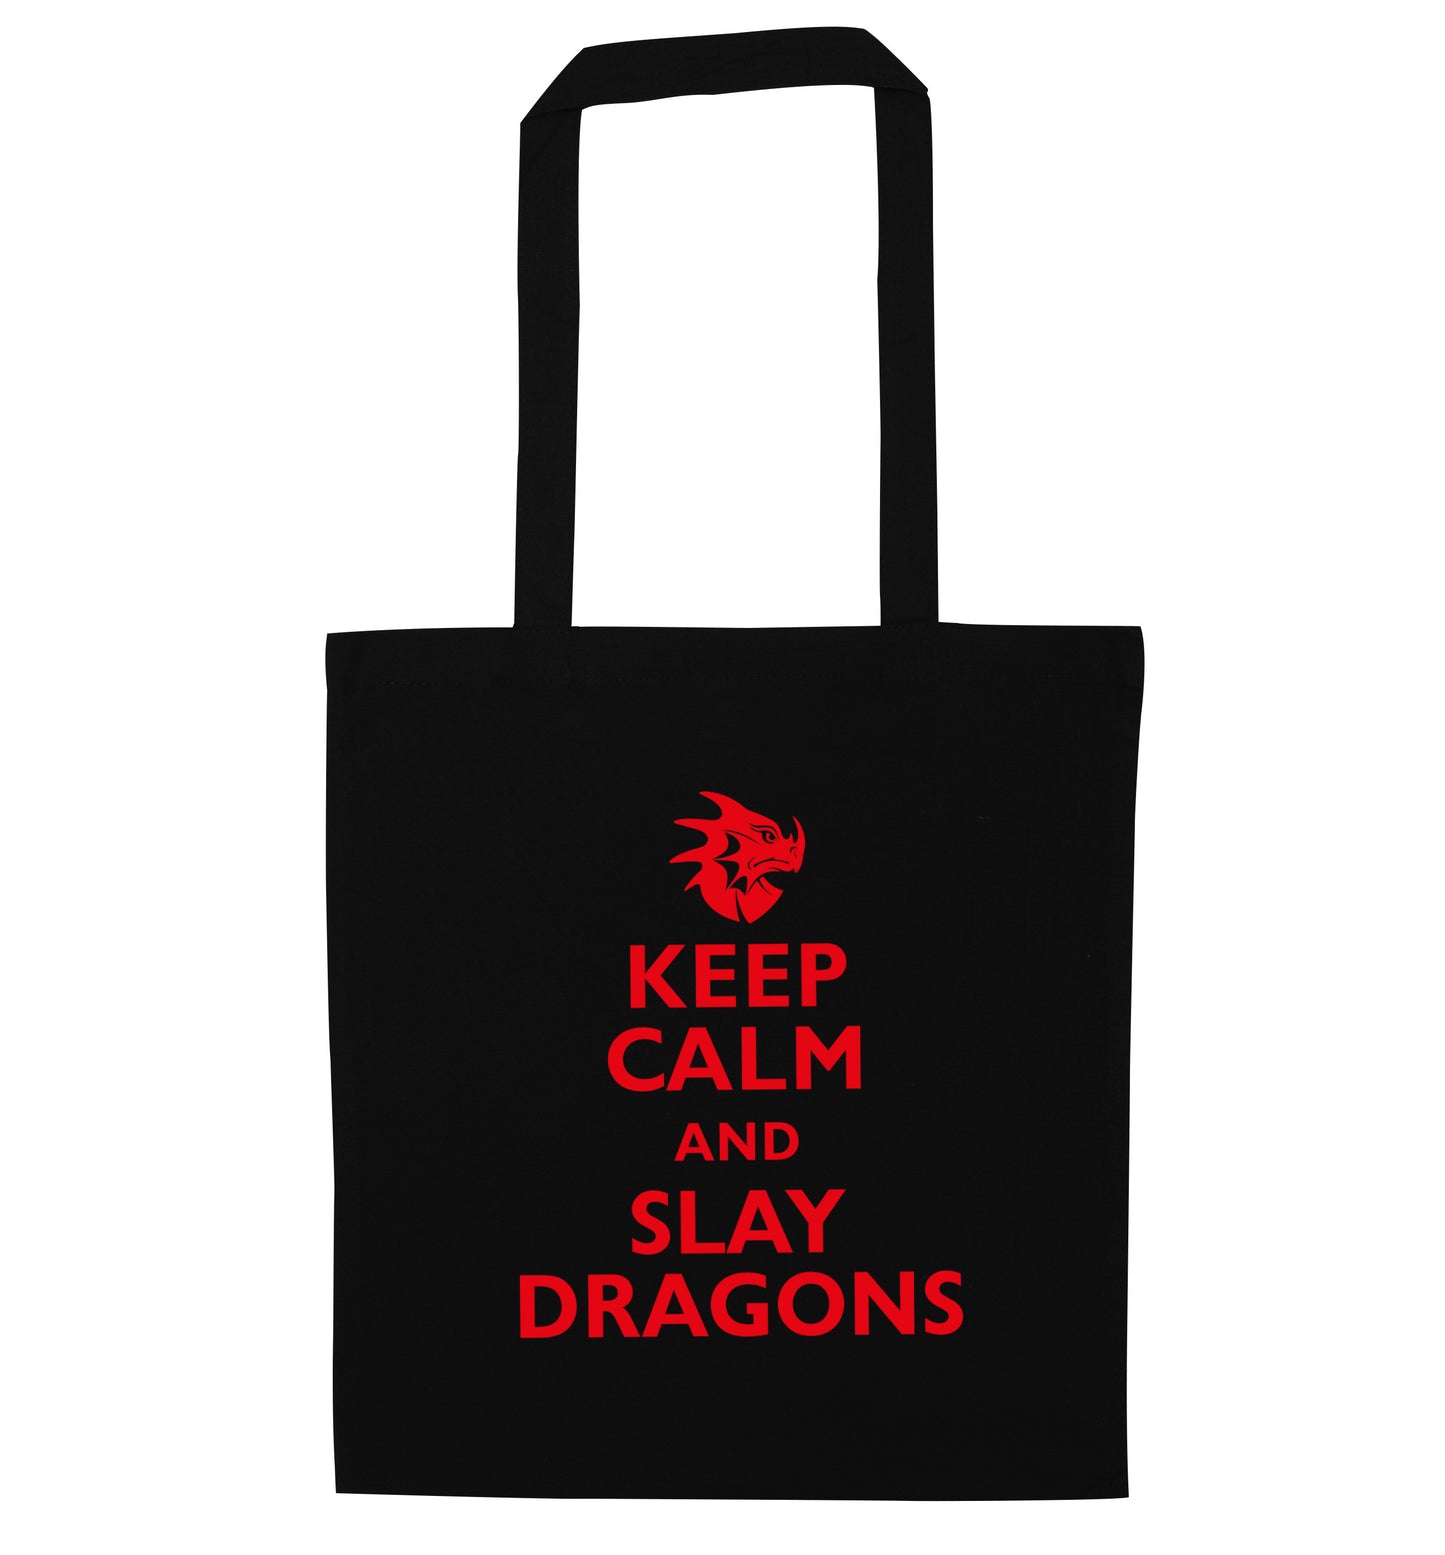 Keep calm and slay dragons black tote bag